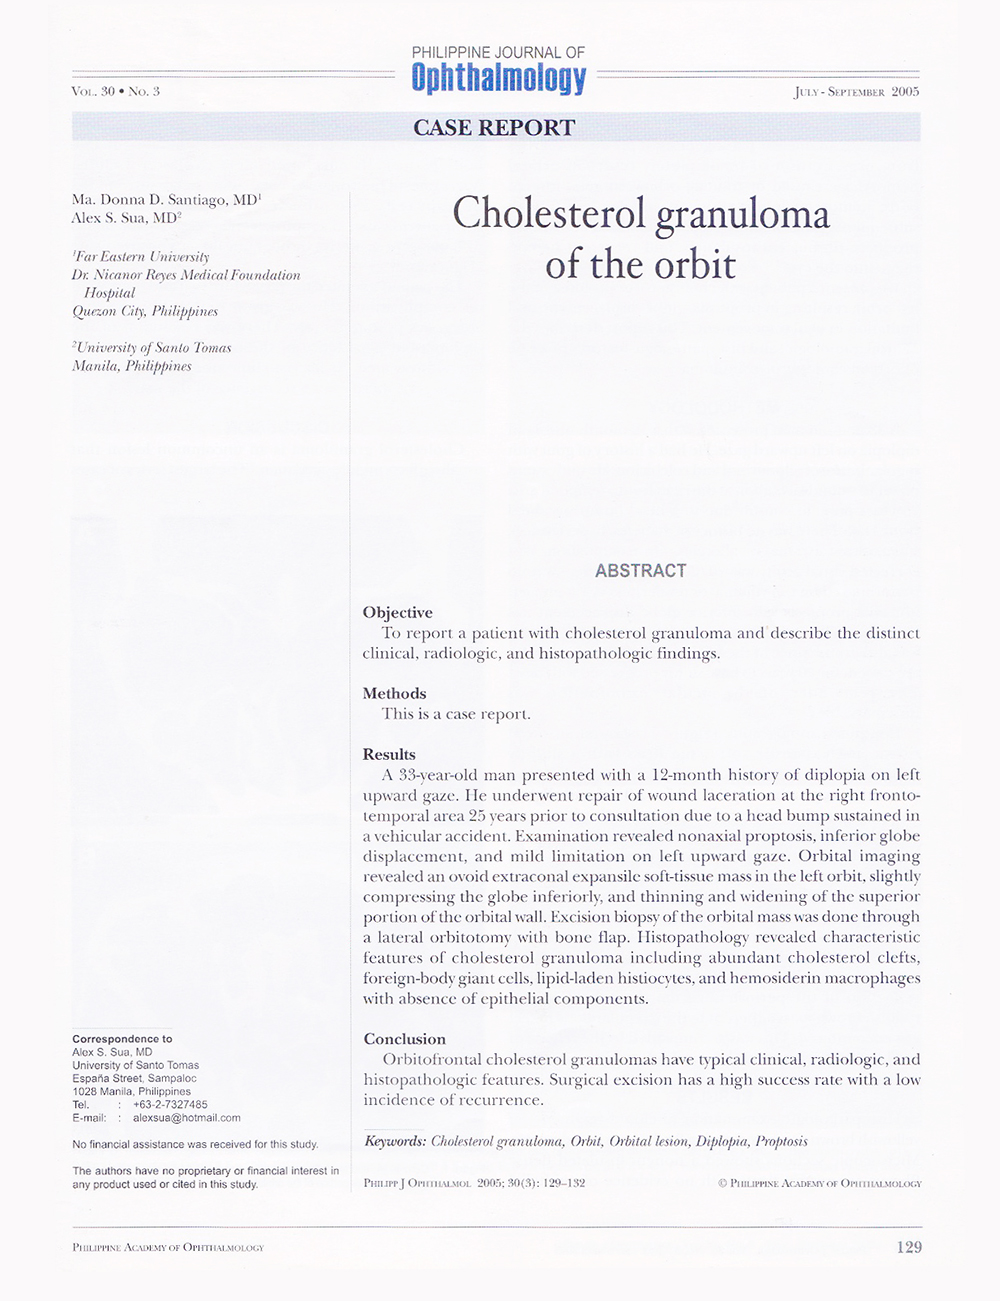 cholesterolgranuloma-p1